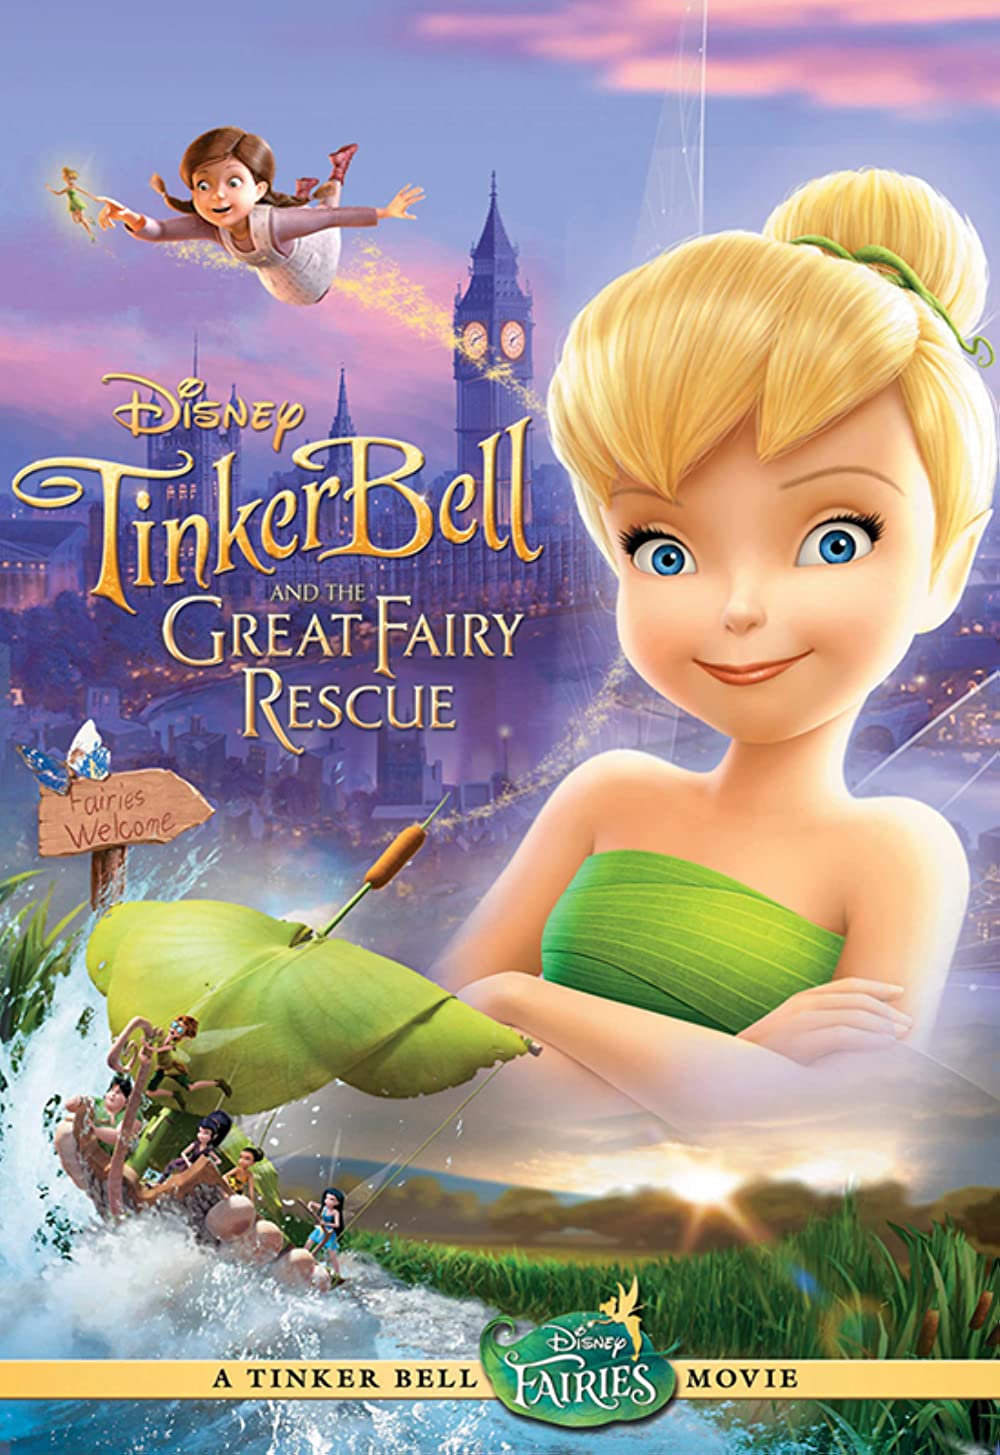 Filmbeschreibung zu Tinker Bell and the Great Fairy Rescue